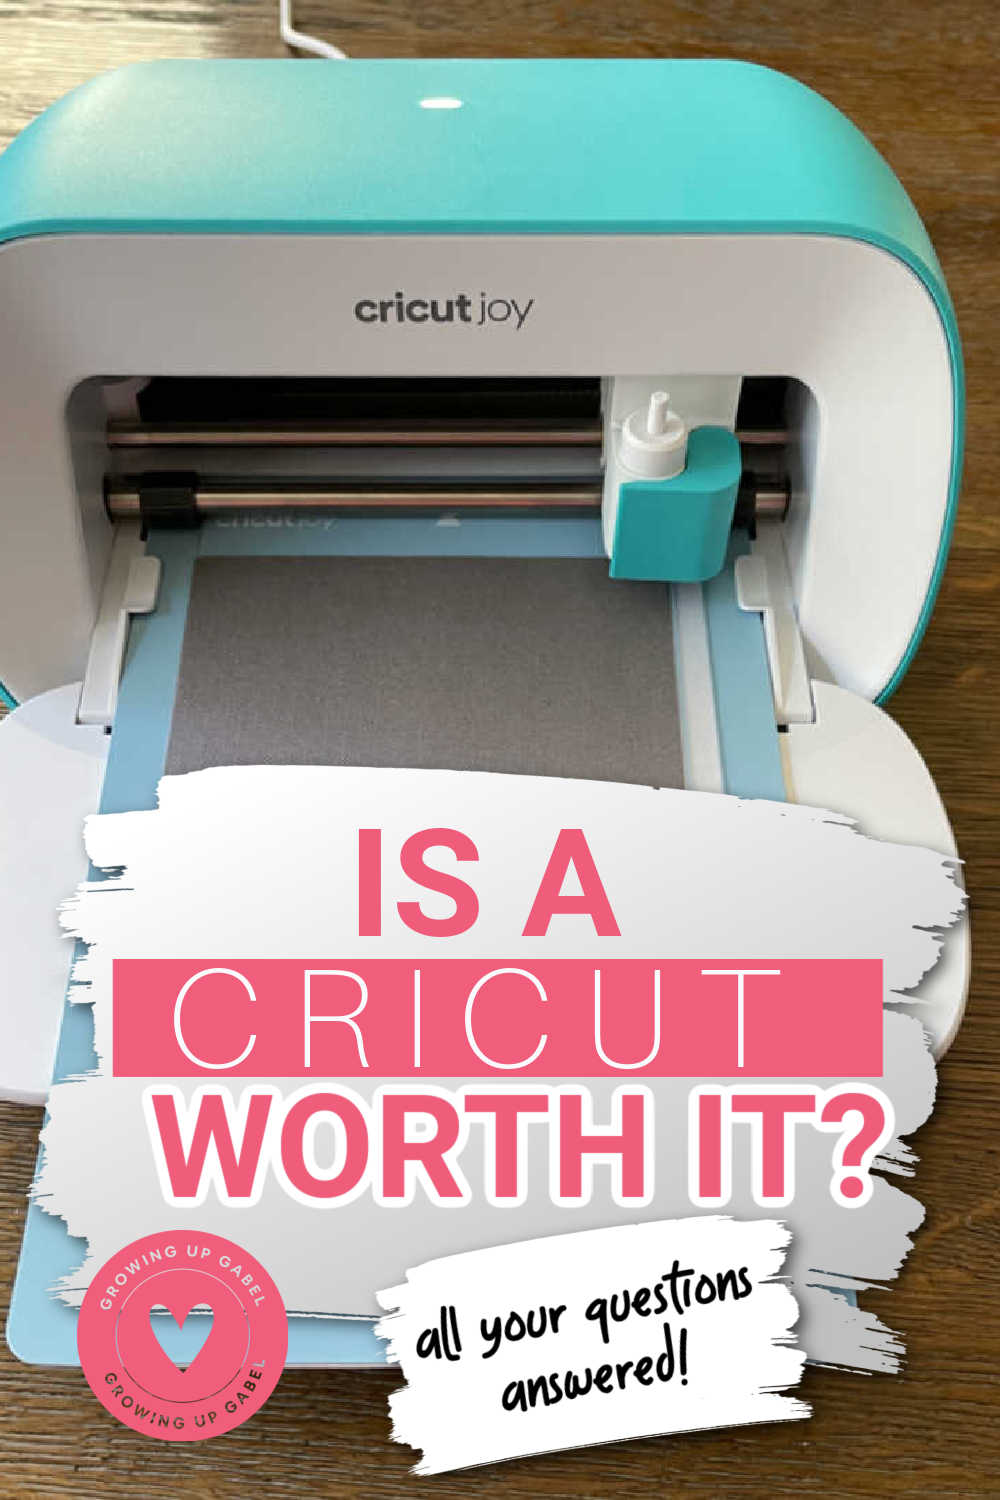 What is Cricut